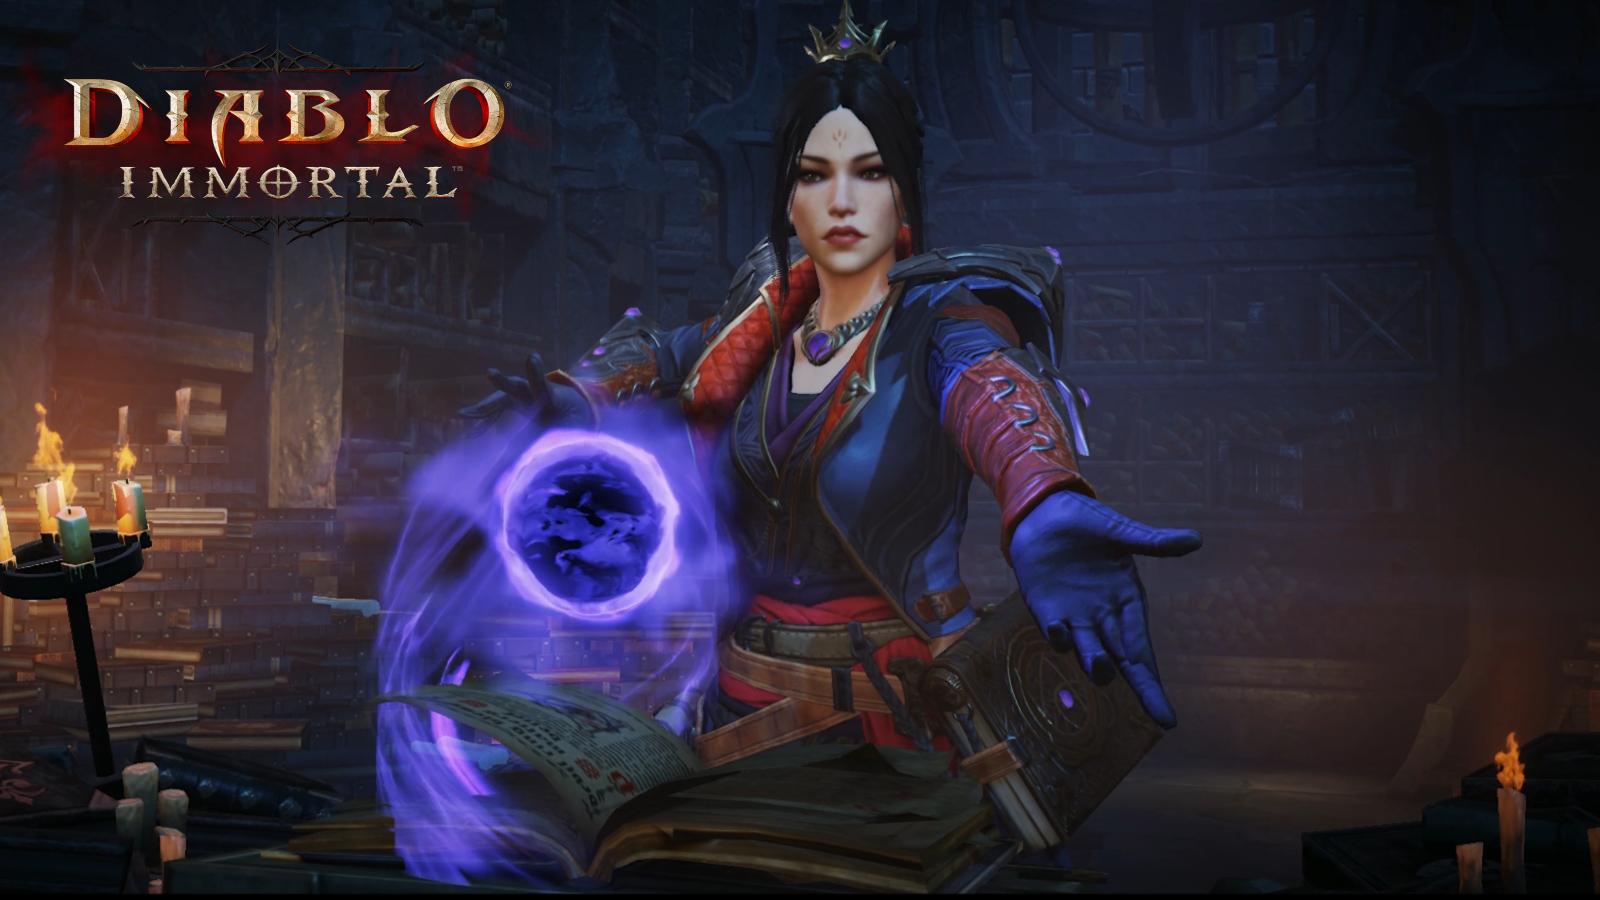 Diablo Immortal - Requisitos para PC, Android e iOS